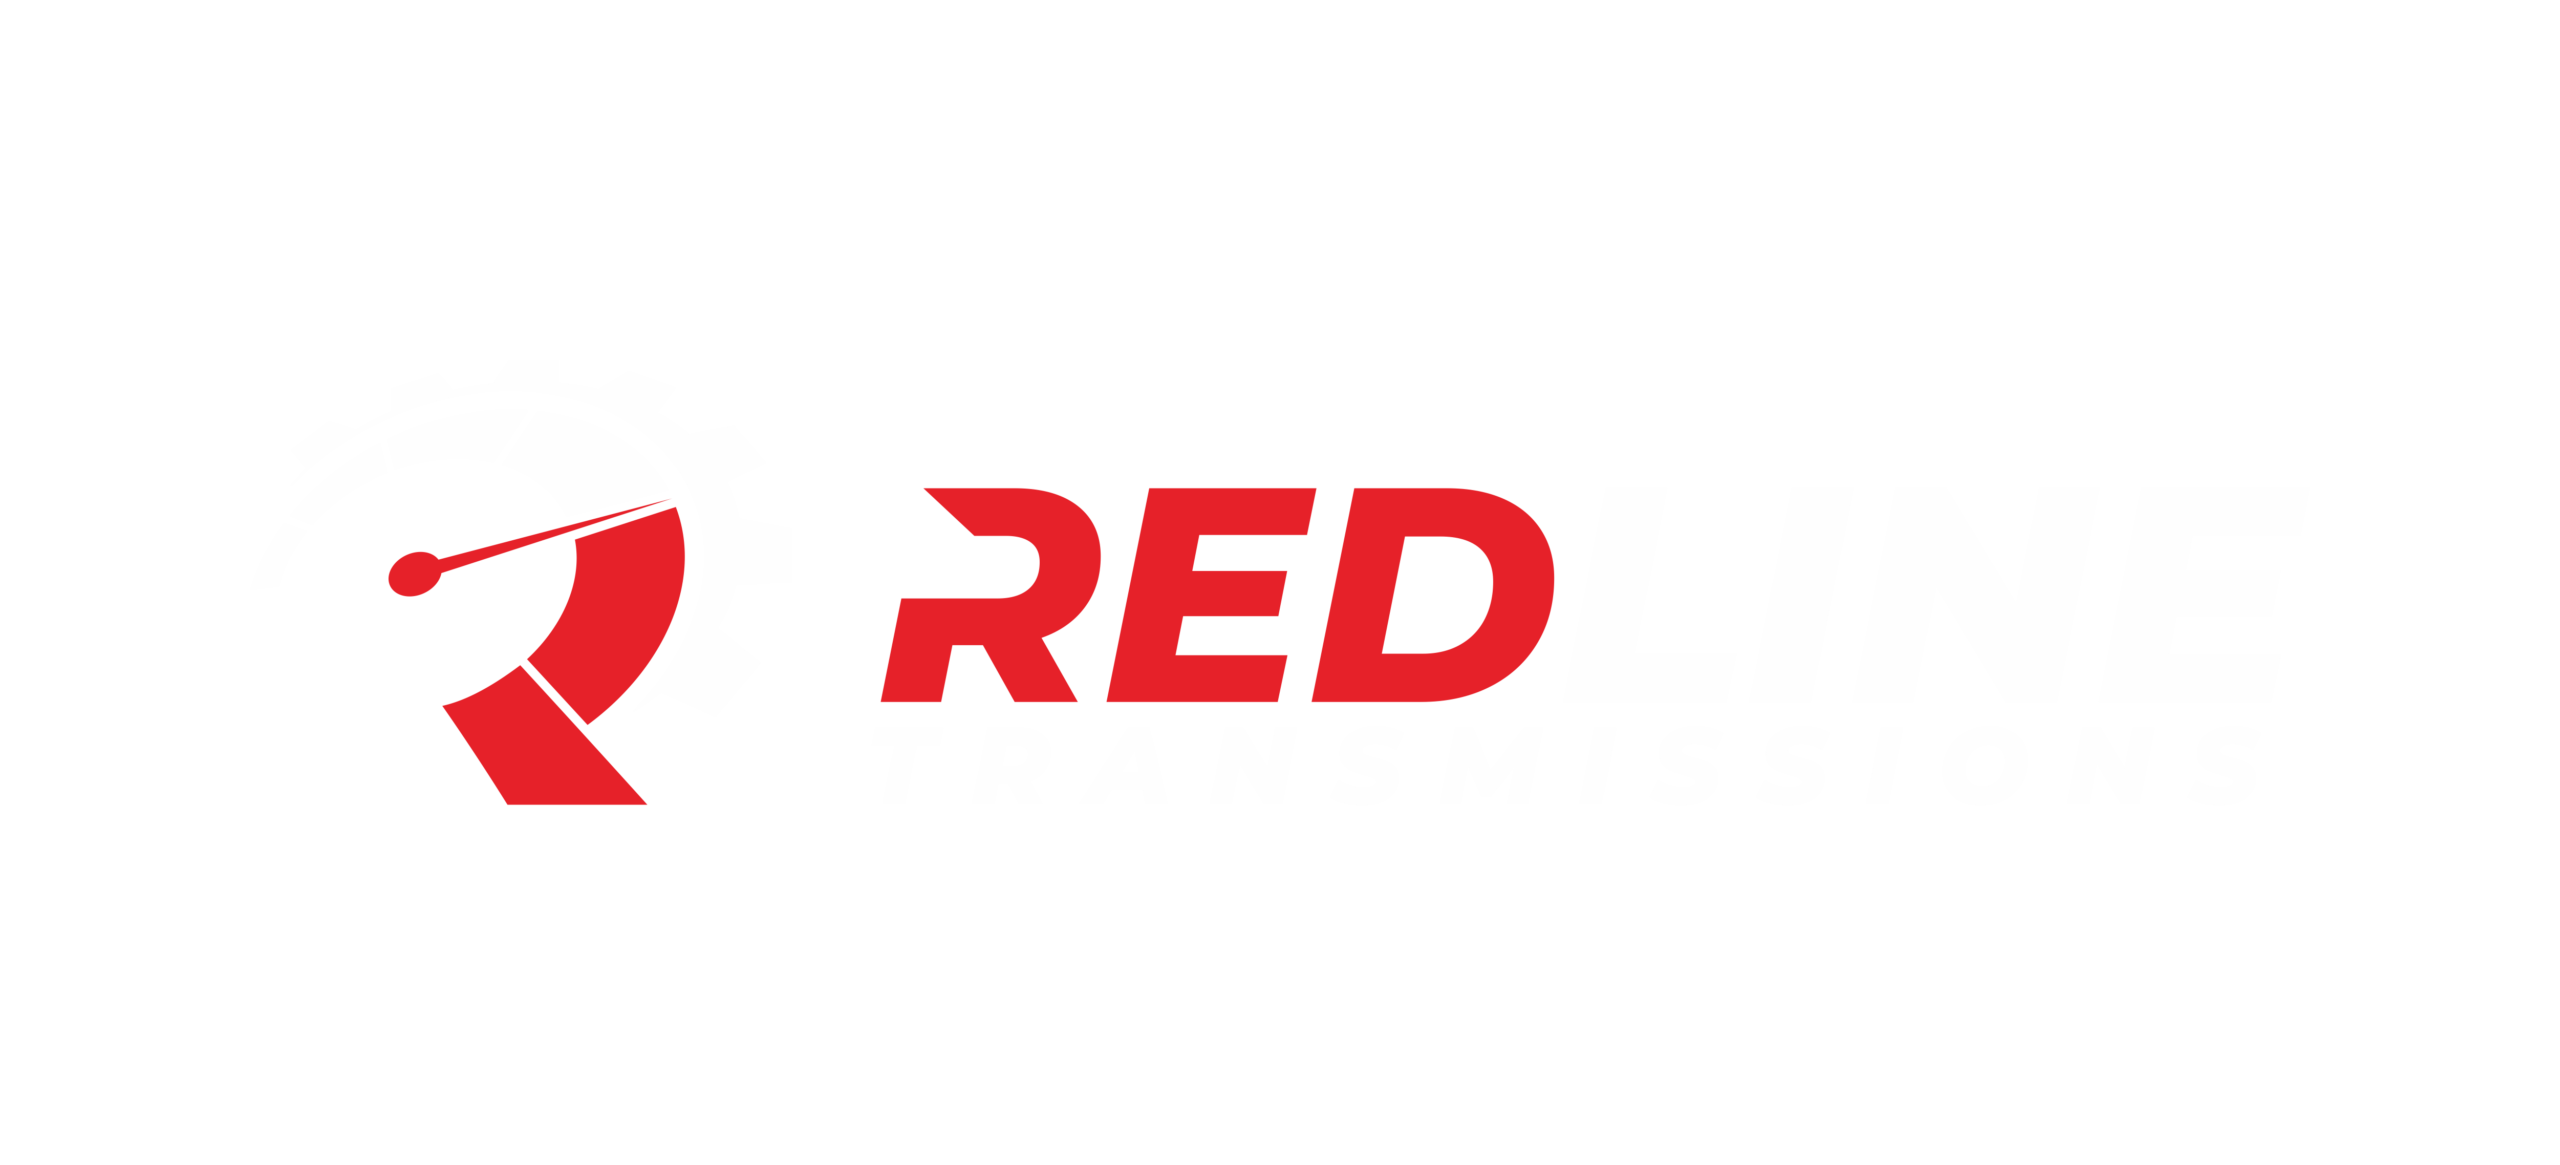 RedLine Transmissions – RedLine Diesel Power Performance Transmissions